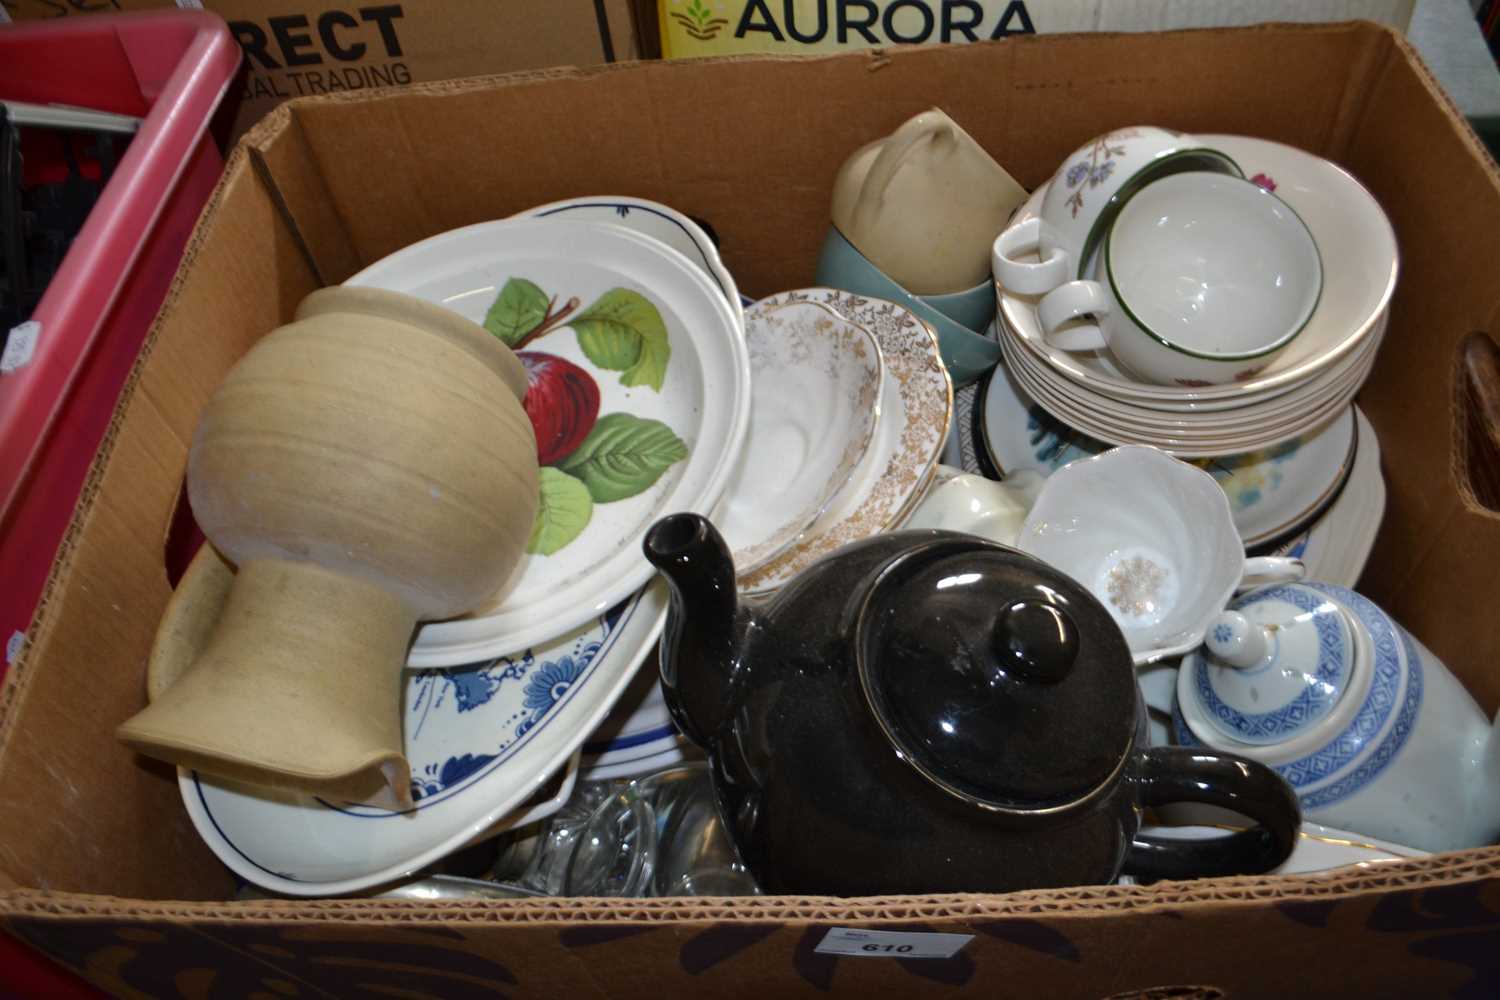 Quantity of assorted ceramics to include, tea, dinner wares etc